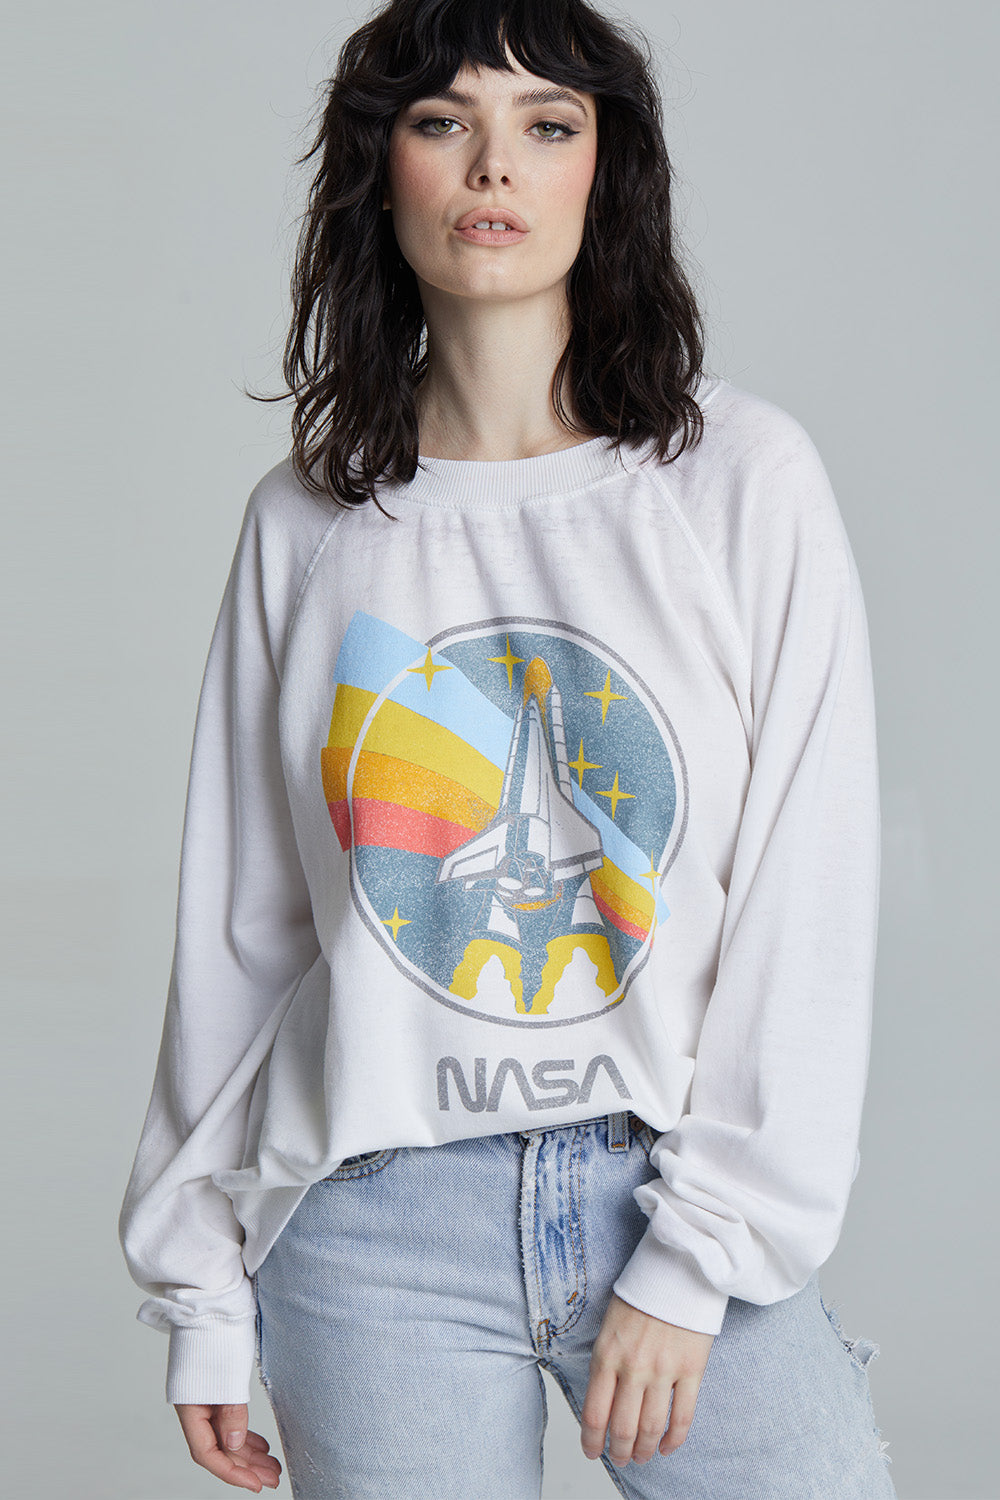 NASA Lift Off Sweatshirt by Recycled Karma Brands